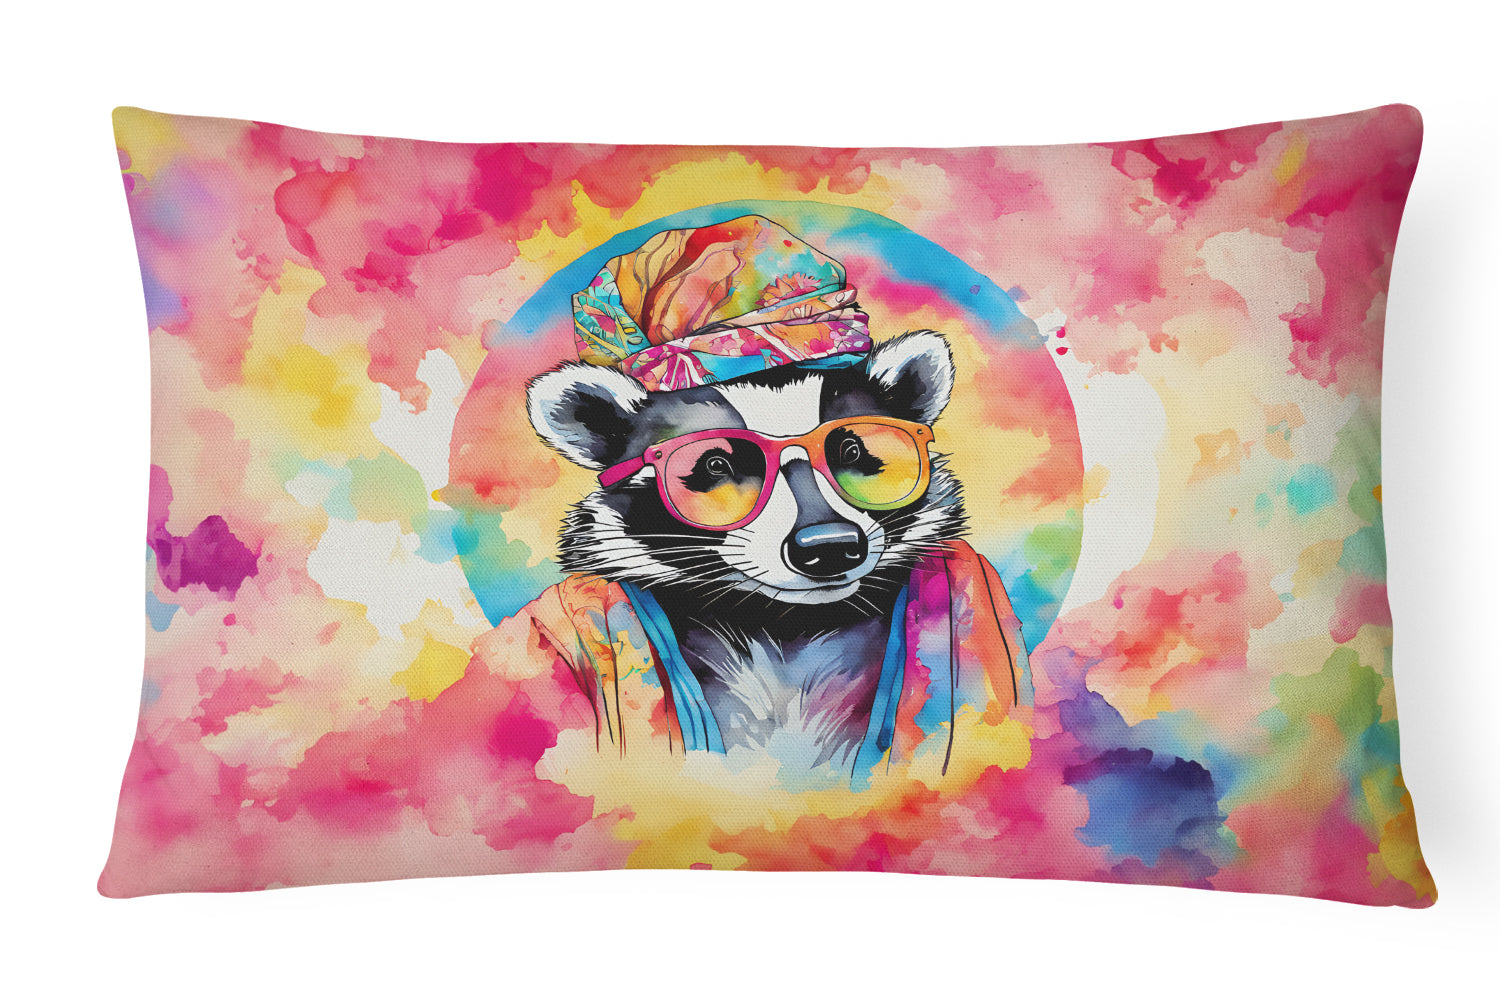 Buy this Hippie Animal Badger Throw Pillow